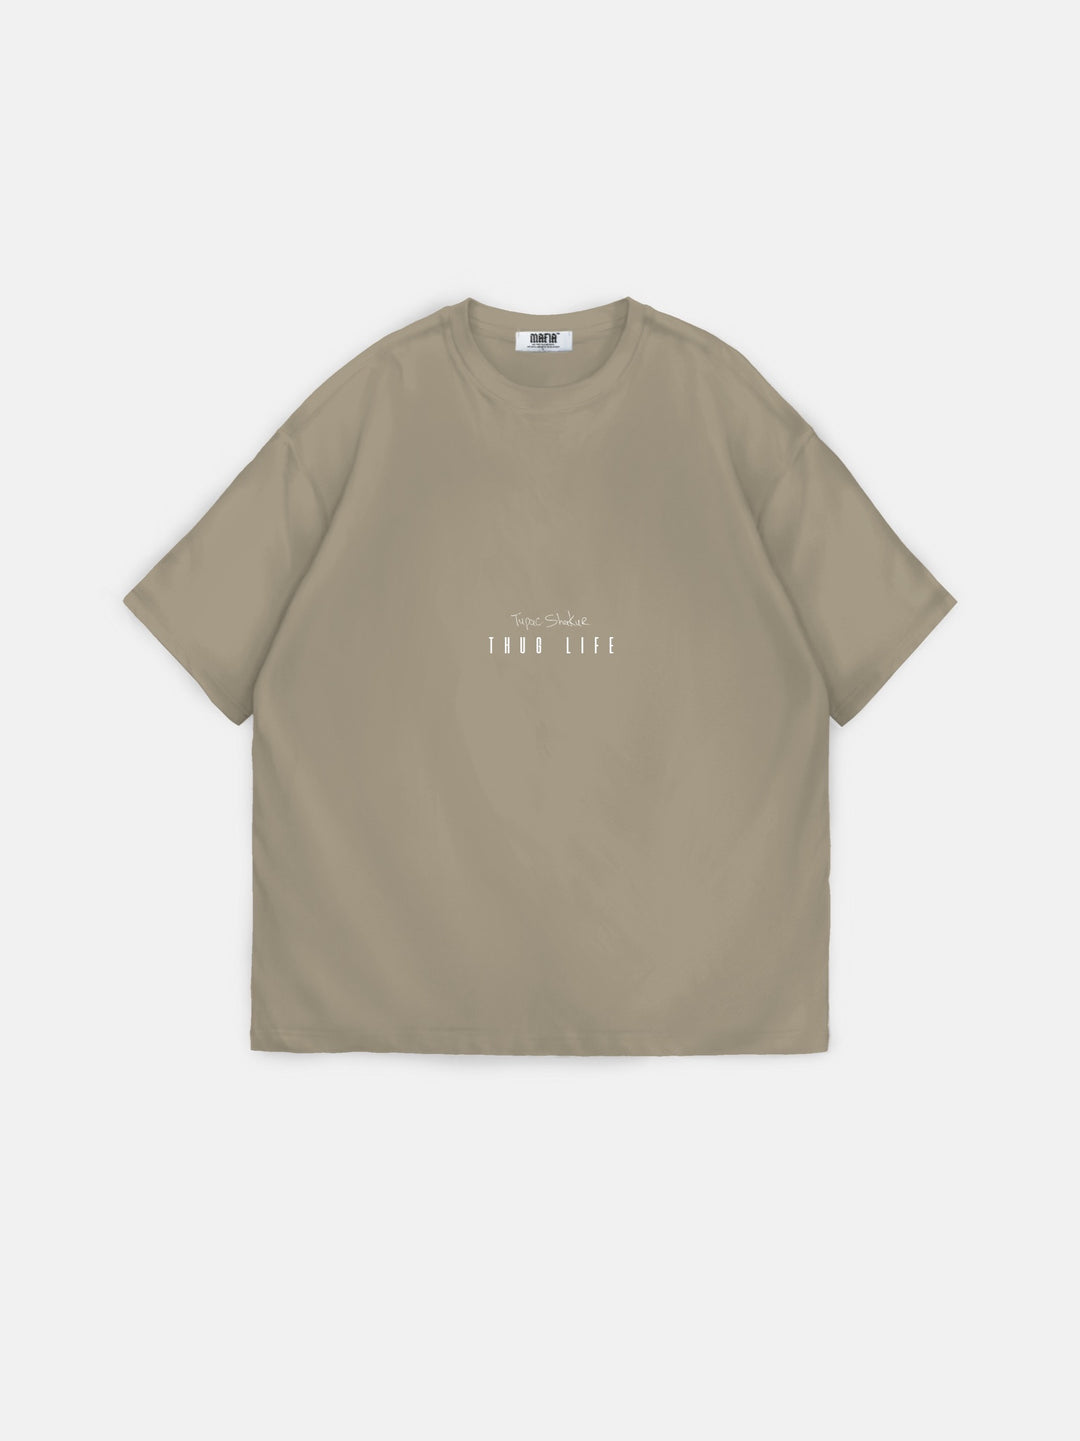 Oversize Tupac Shakur T-shirt - Stone